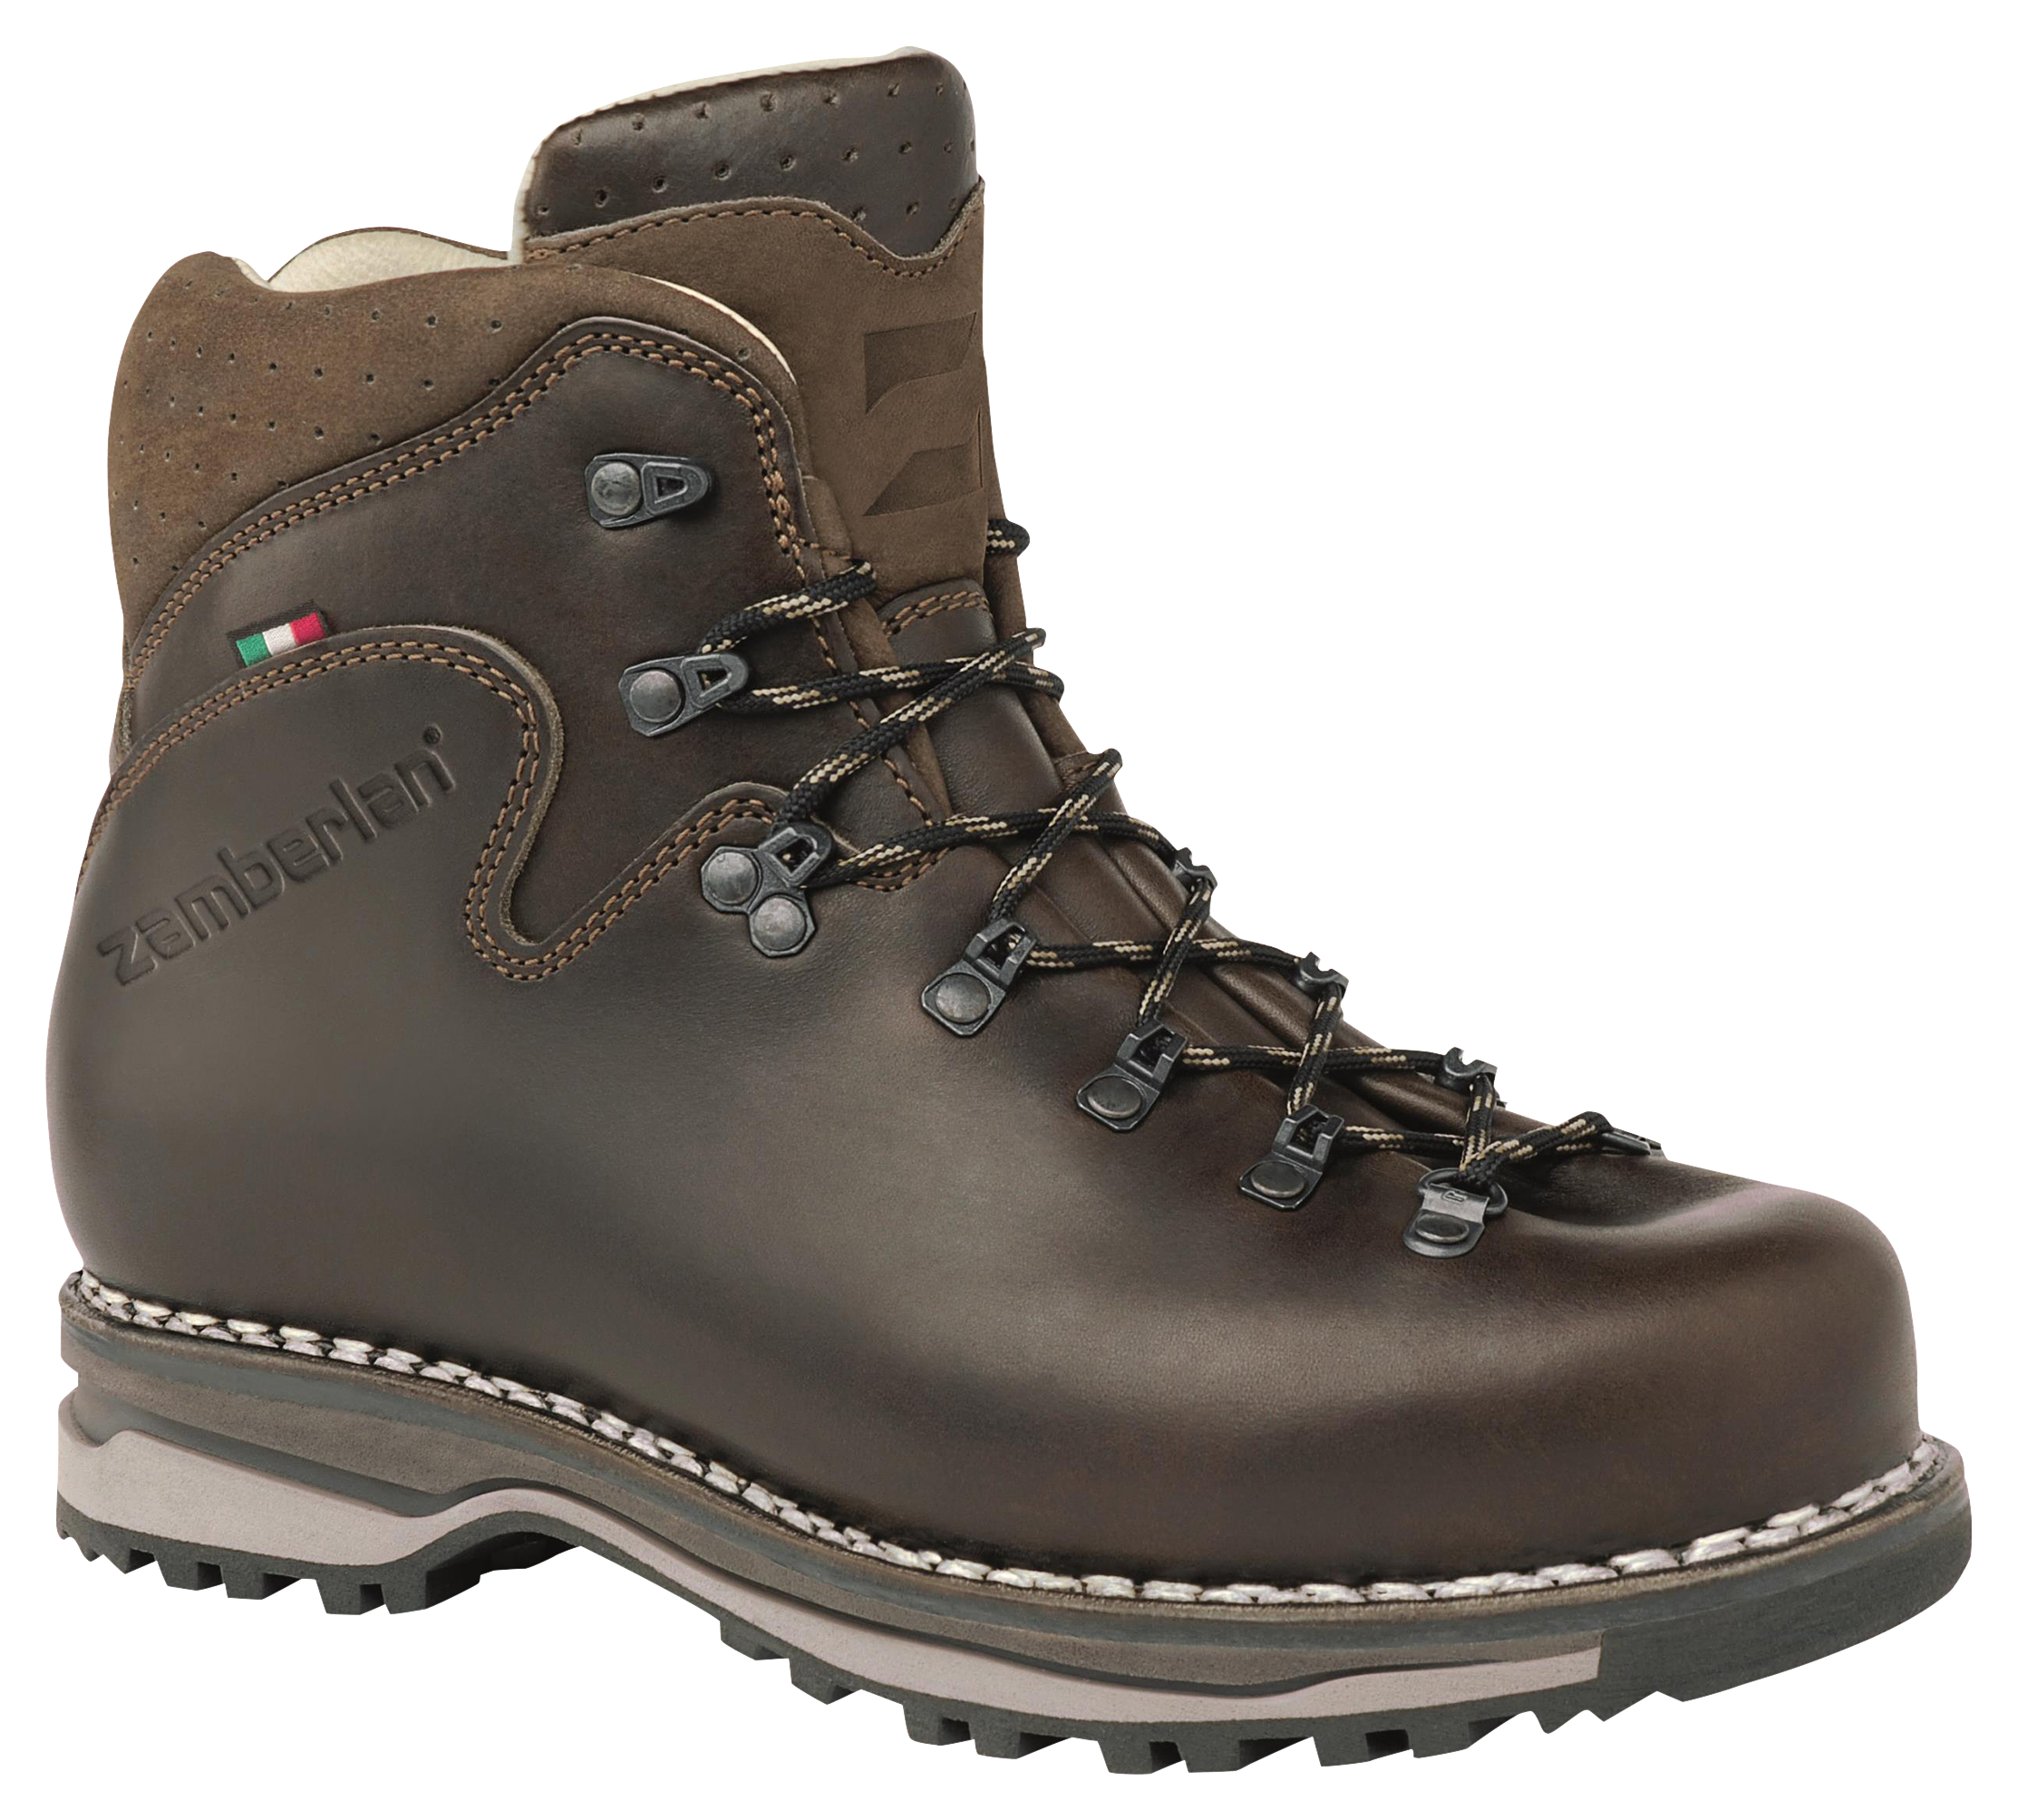 Zamberlan Latemar NW Hiking Boots for Men - Waxed Dark Brown - 11.5M